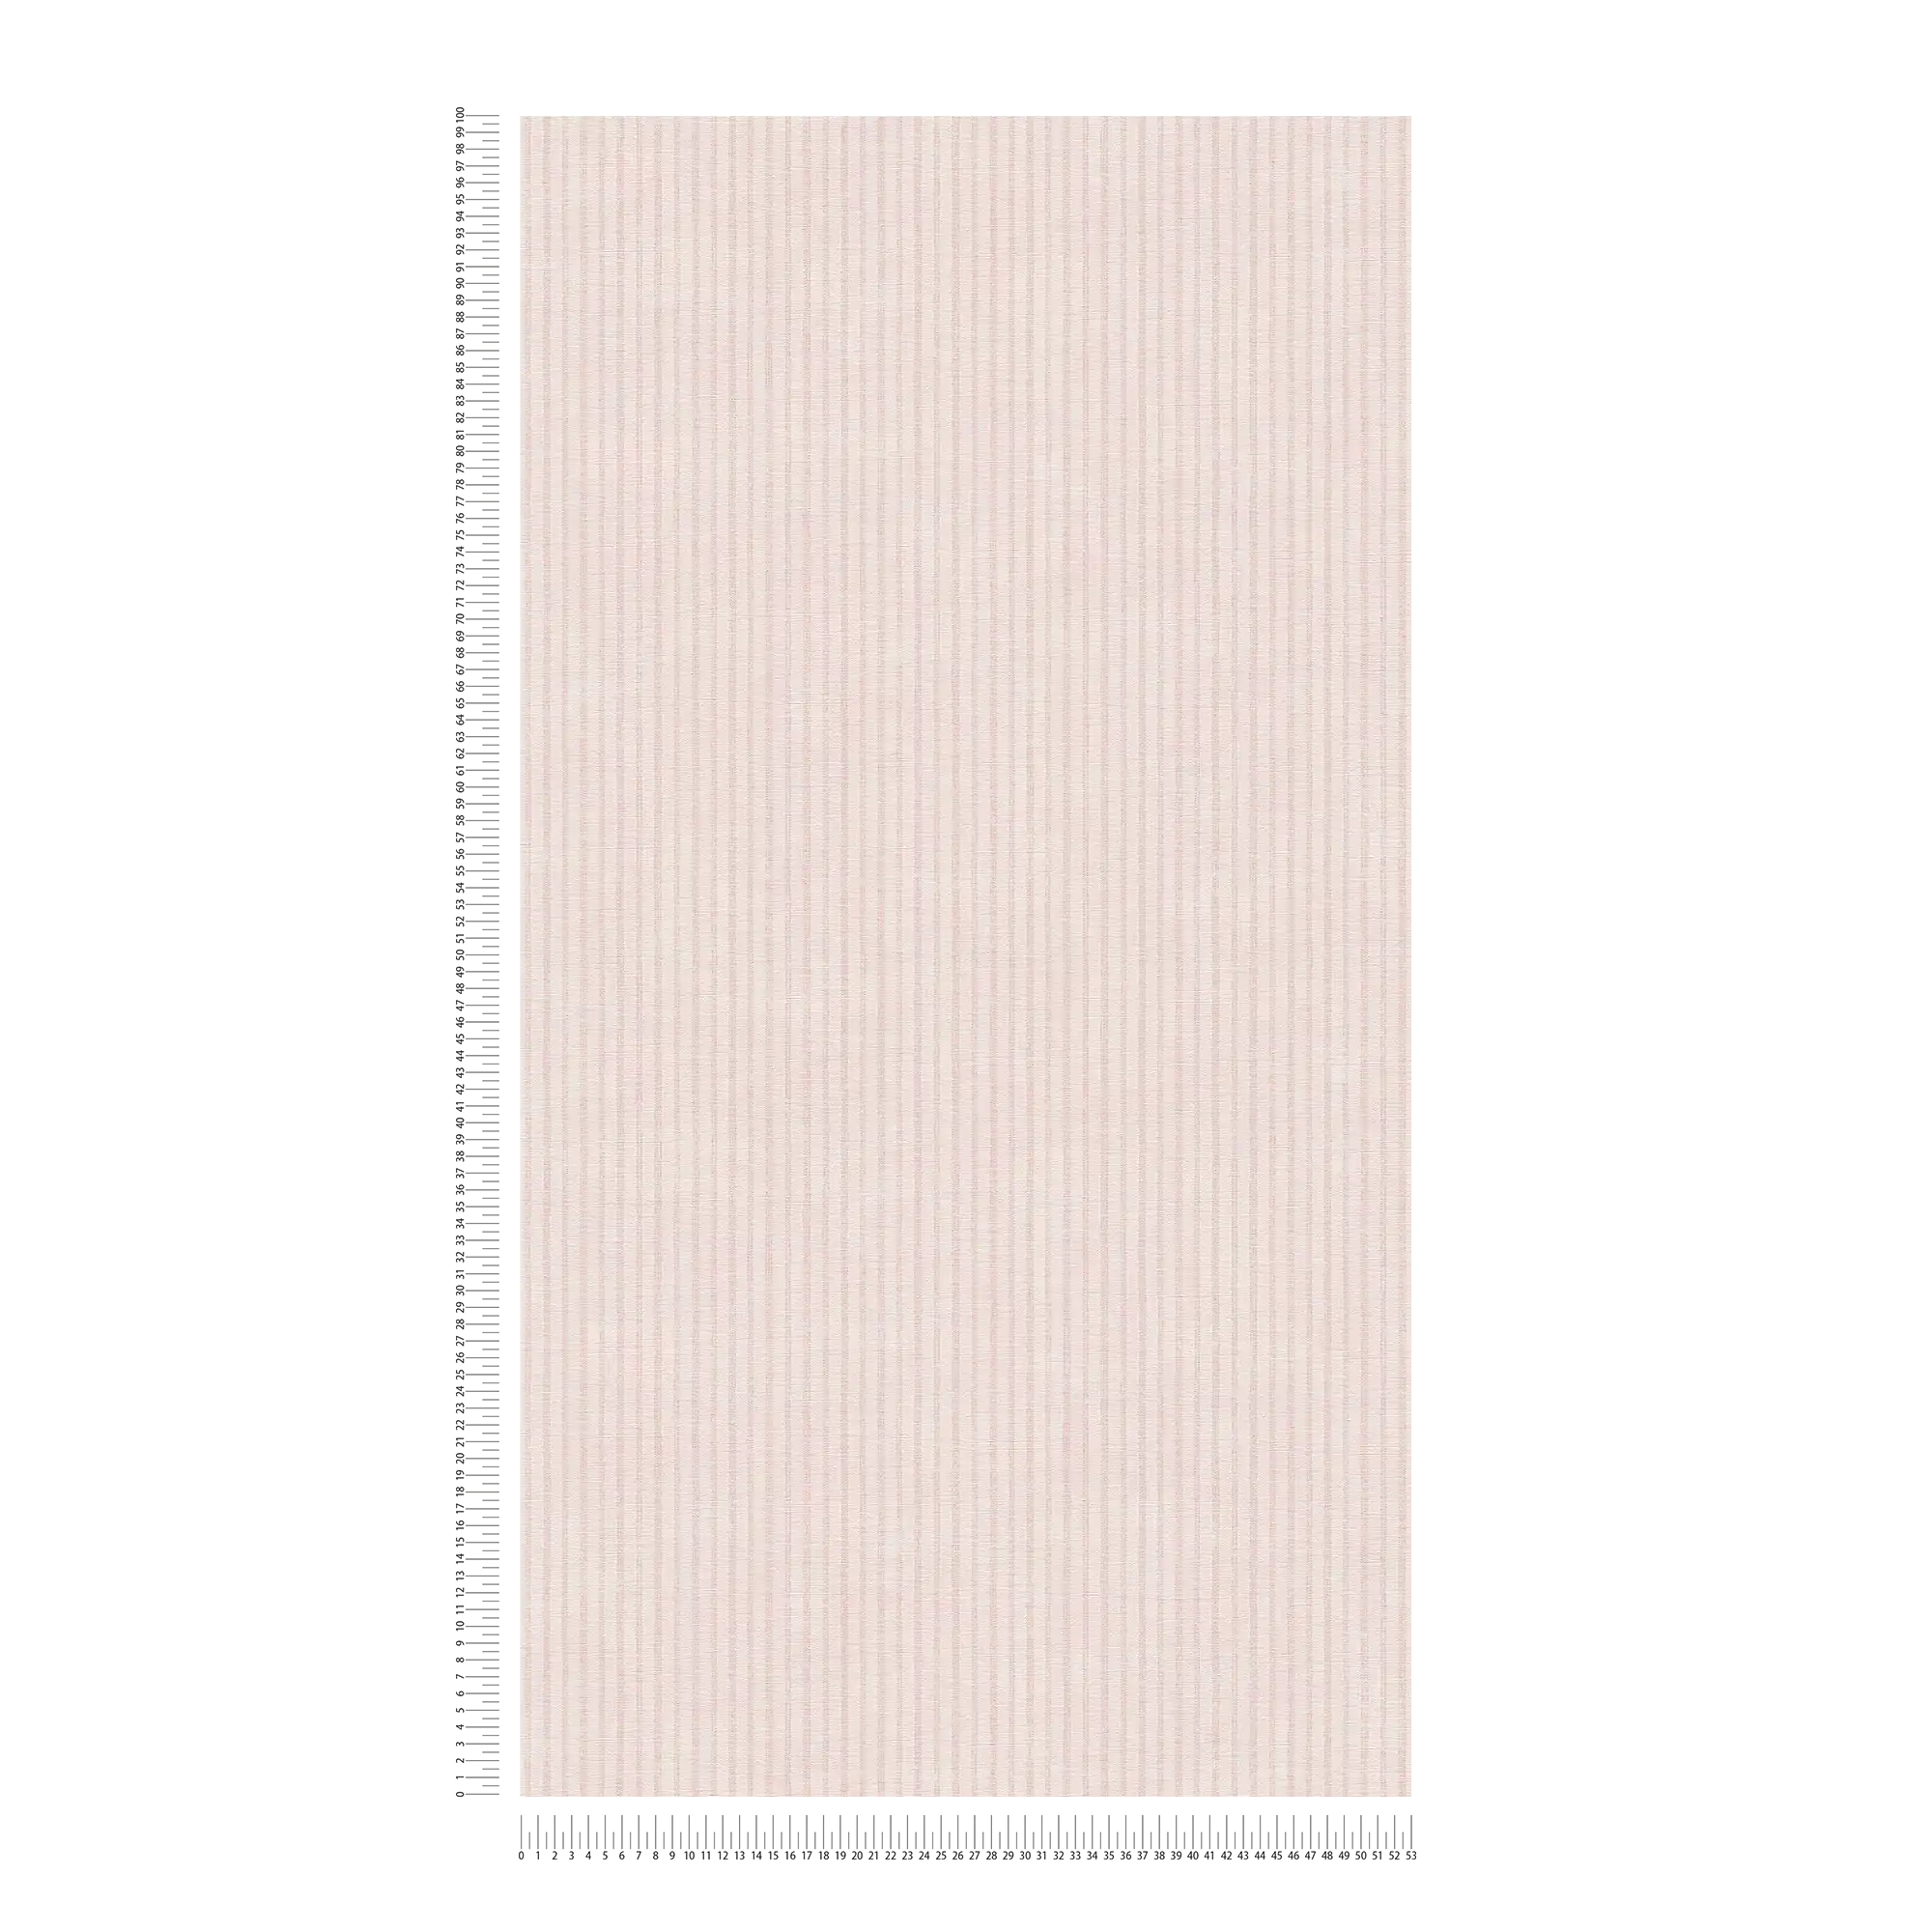             Papel pintado a rayas de estilo rústico - crema, rosa
        